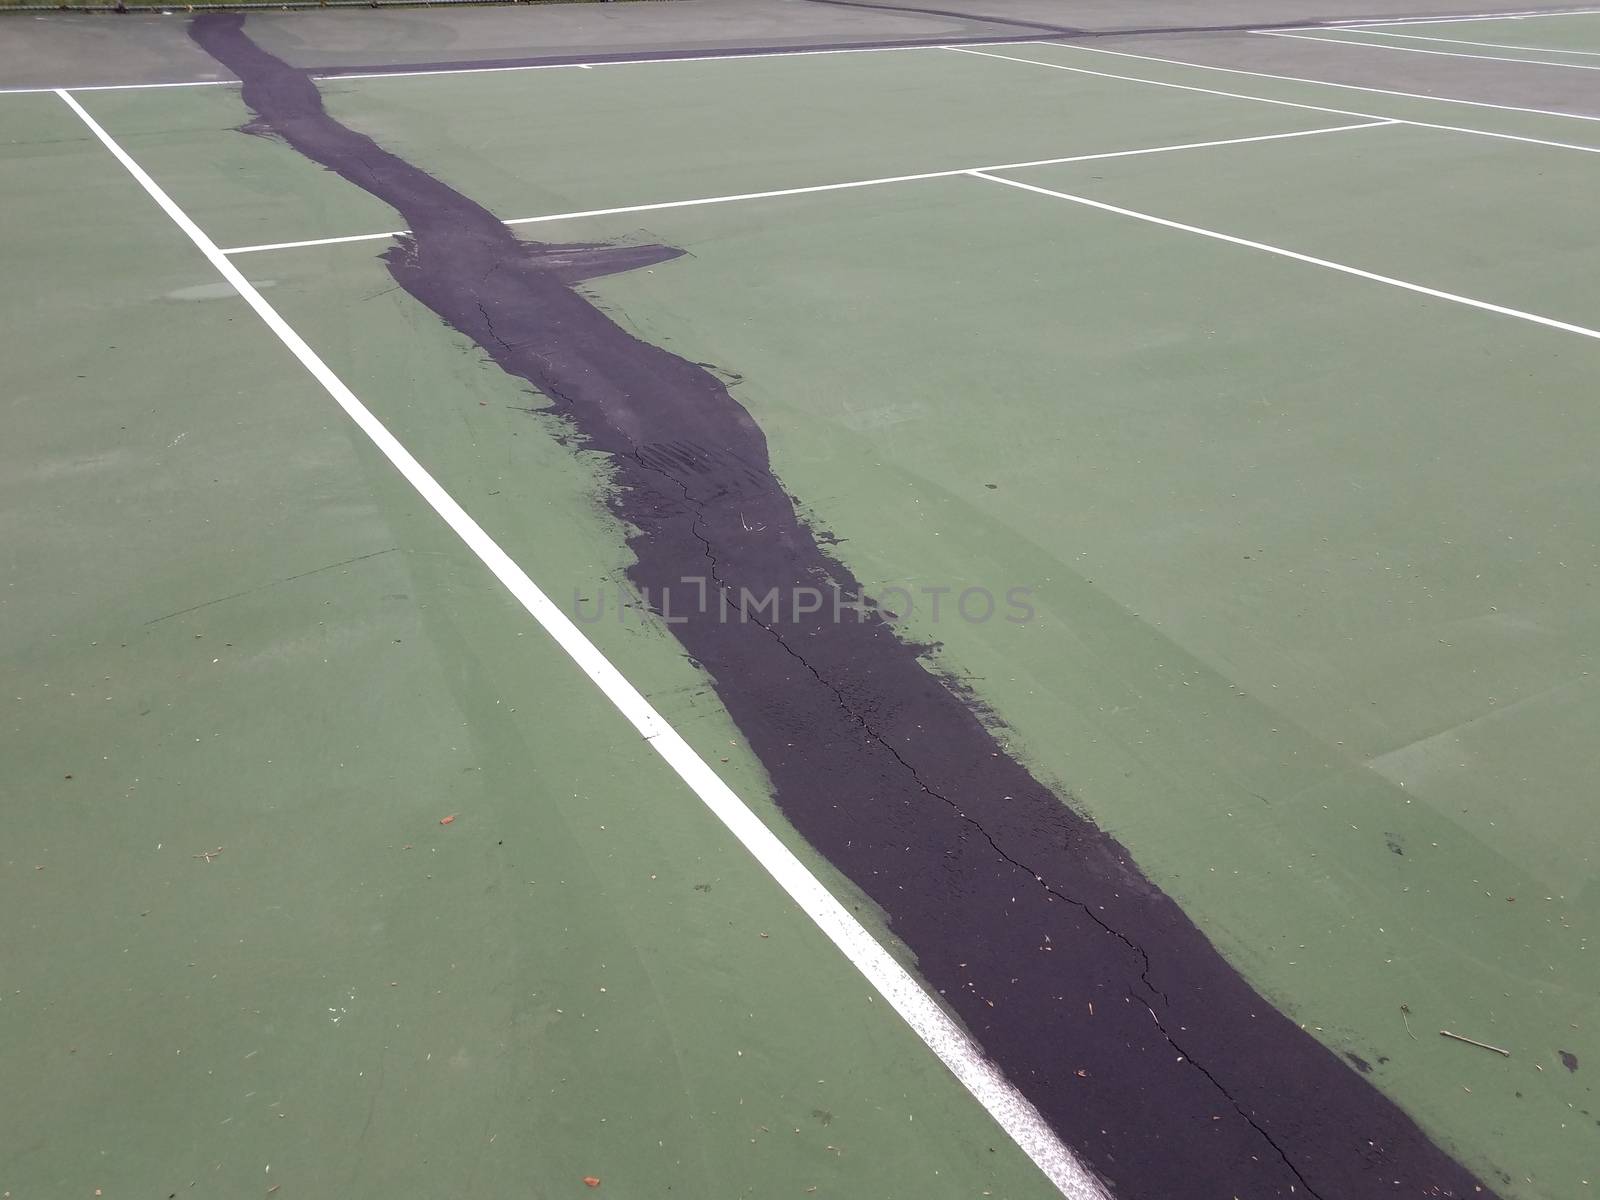 black tar or liquid to repair cracks and damage on green tennis court